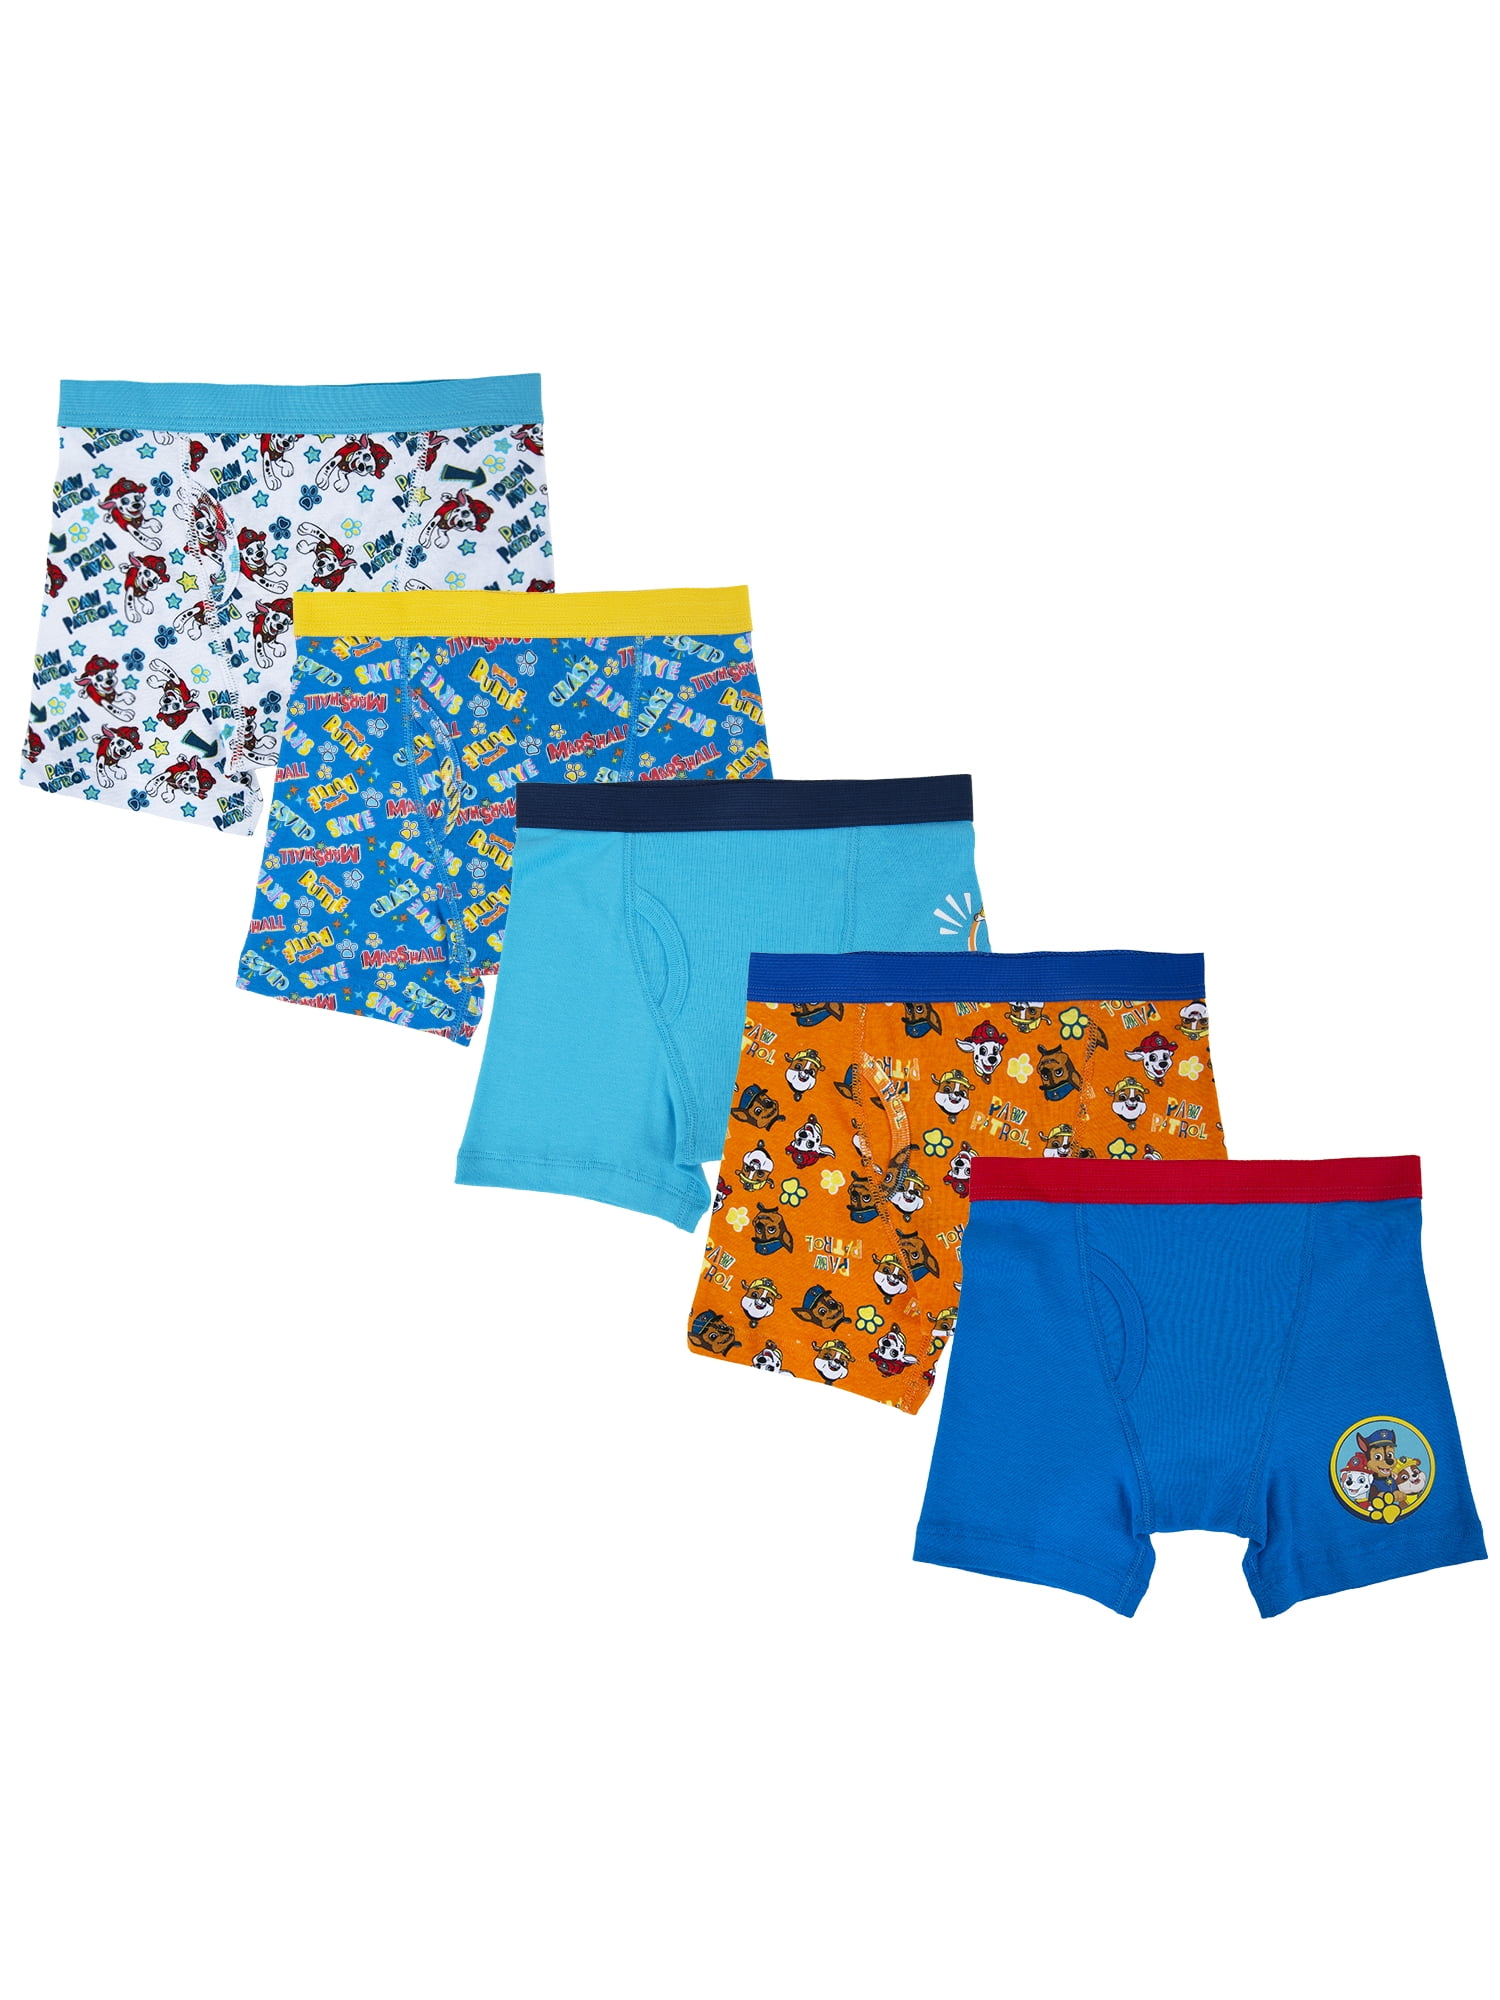 Pack Of 5 Disney Cars kids Pants Boys Briefs Boys Underwear Age 2-6 Years 